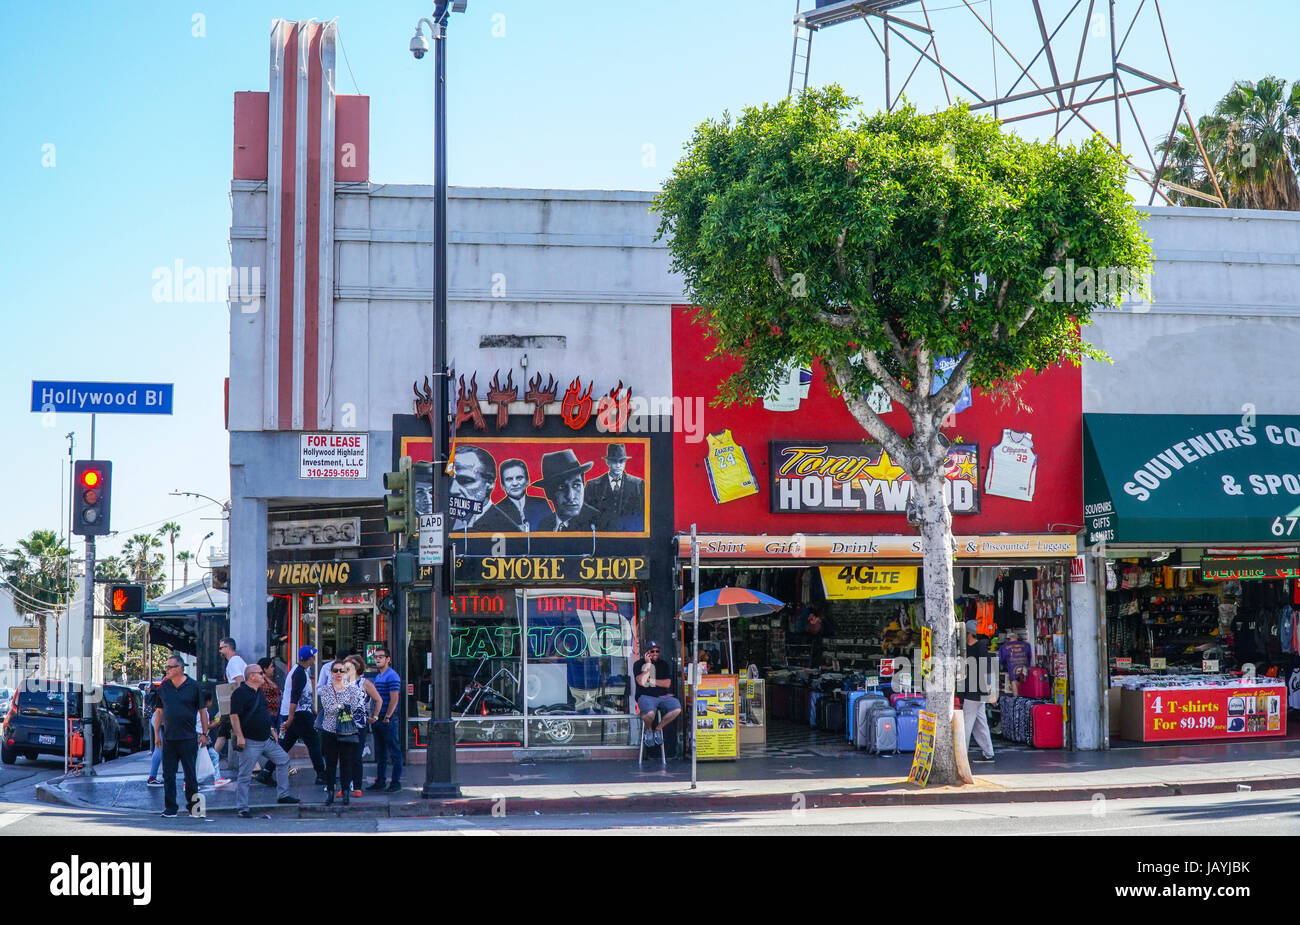 Crazy Souvenir and smoke shops at Hollywood Boulevard - LOS ANGELES - CALIFORNIA Stock Photo